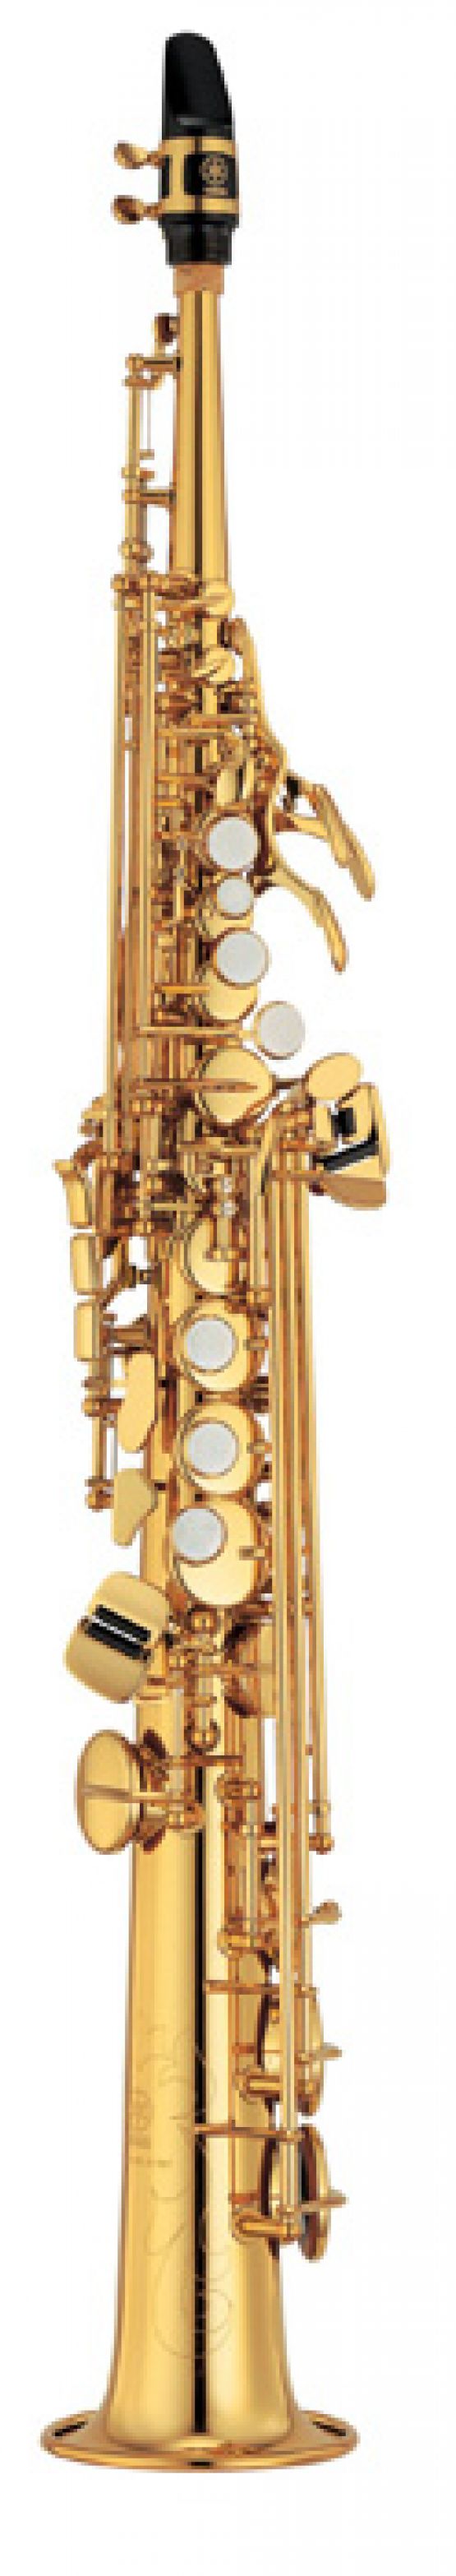 Yamaha YSS475 Soprano Saxophone  main image